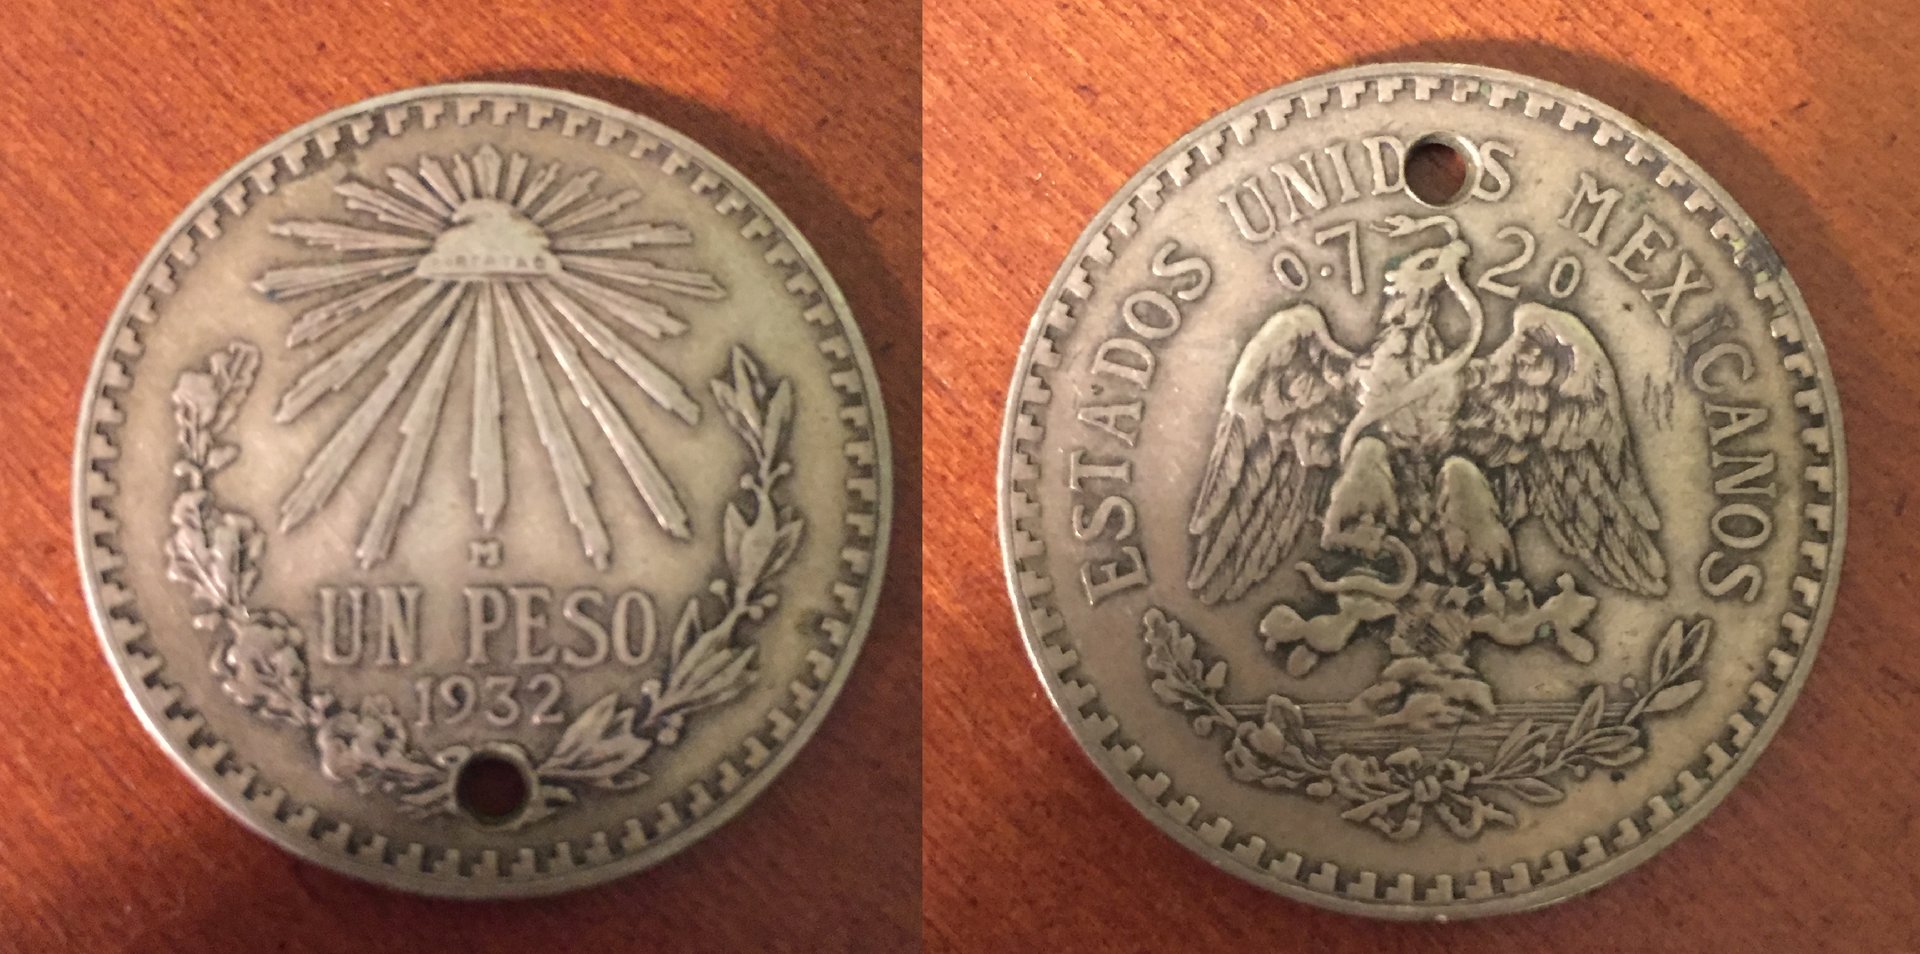 1932 Mexico Peso.jpg